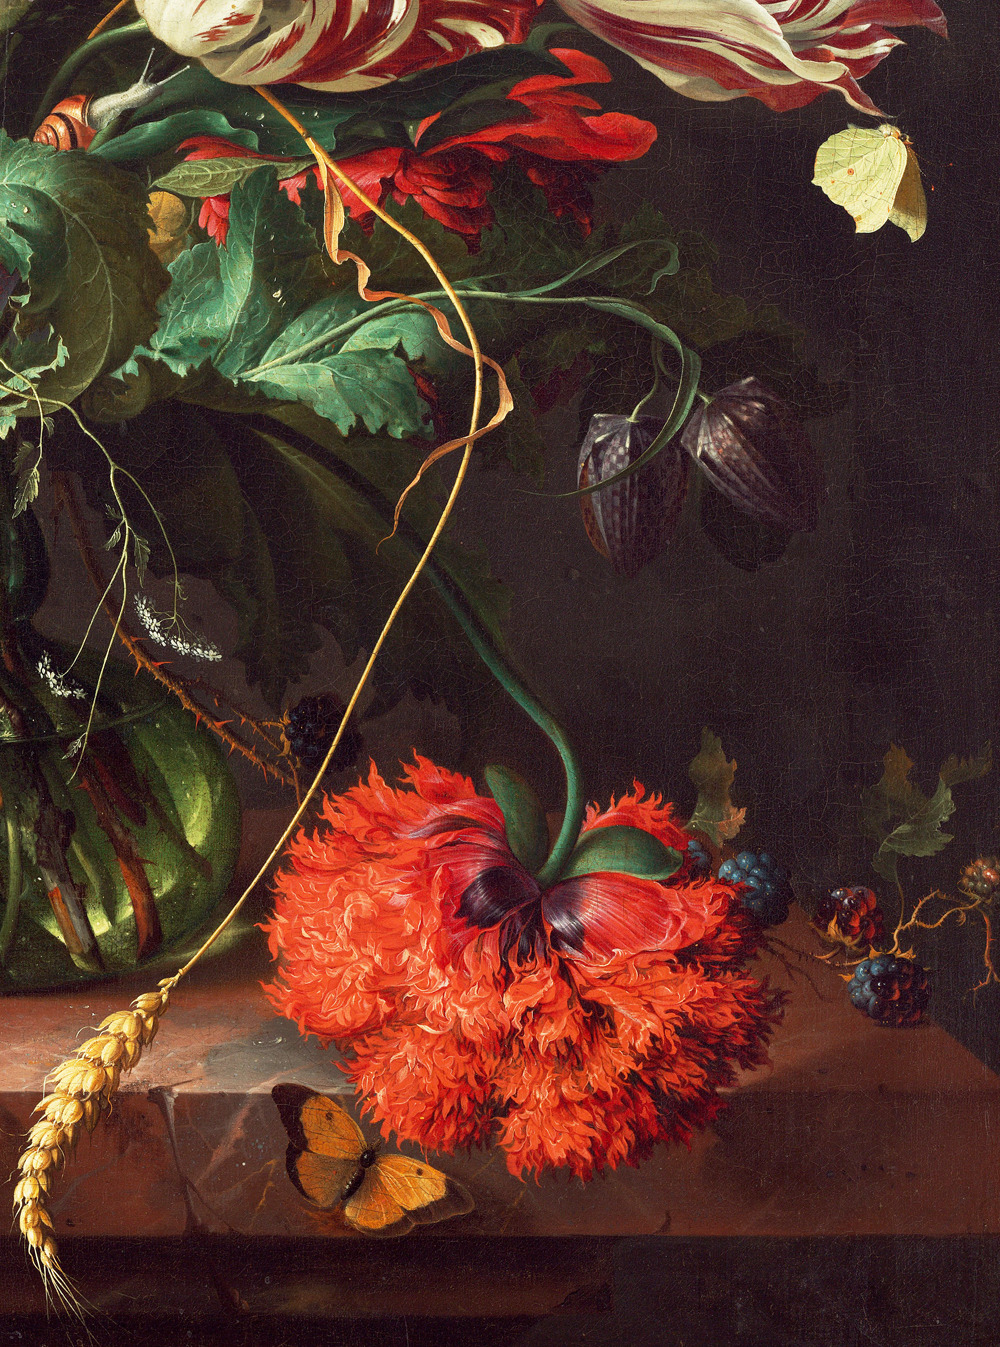 jaded-mandarin:   Jan Davidsz de Heem. Detail from Vase of Flowers, 1660. 